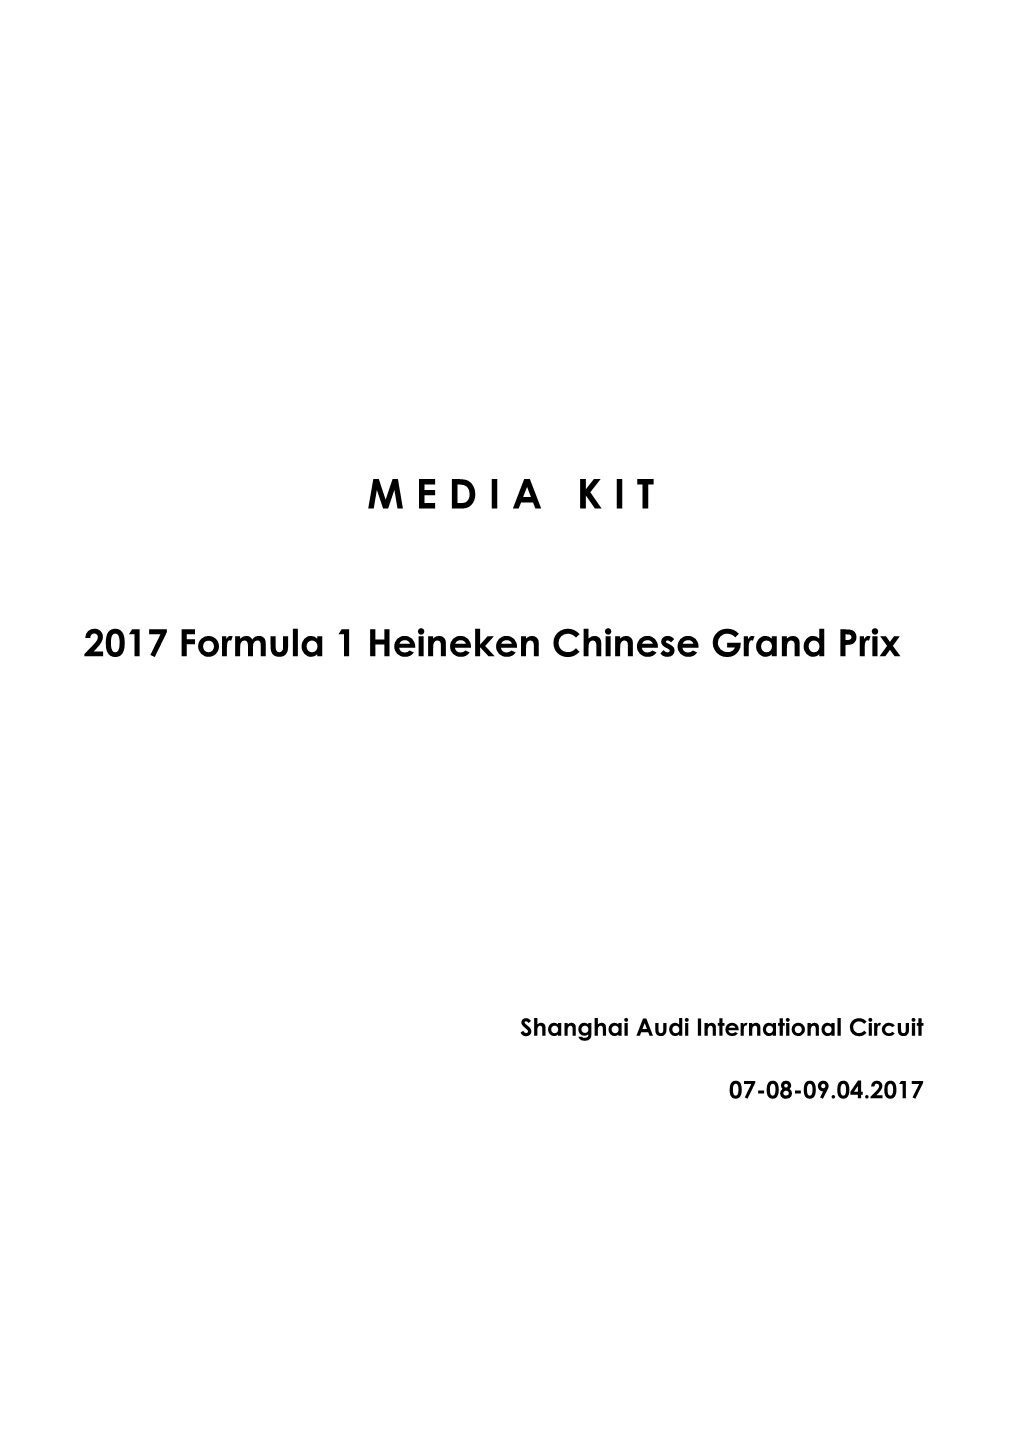 Chinese Grand Prix Meida